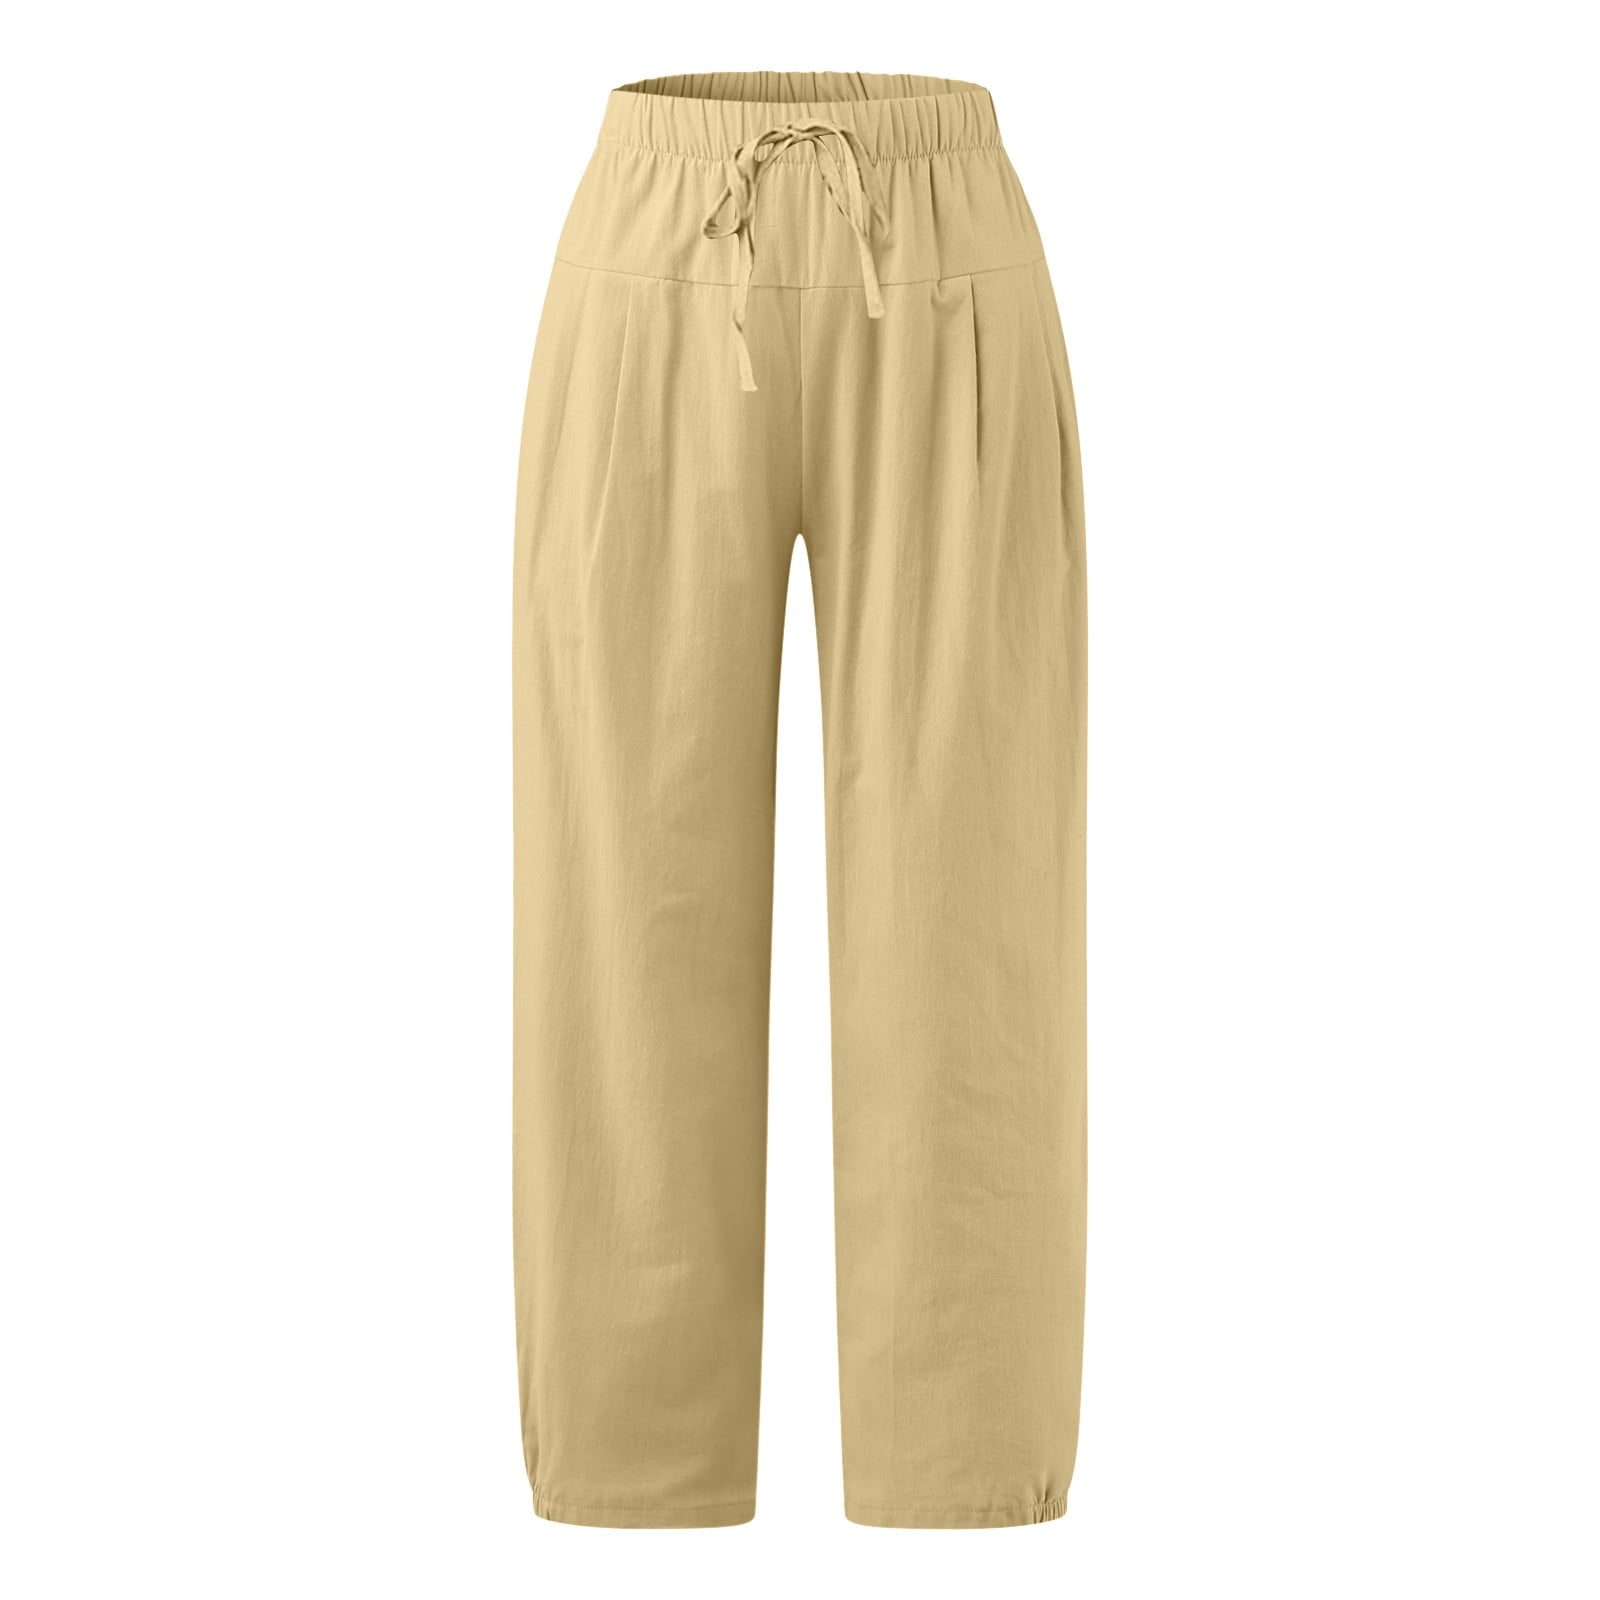 Wide-leg Linen-blend Pants - Light yellow - Ladies